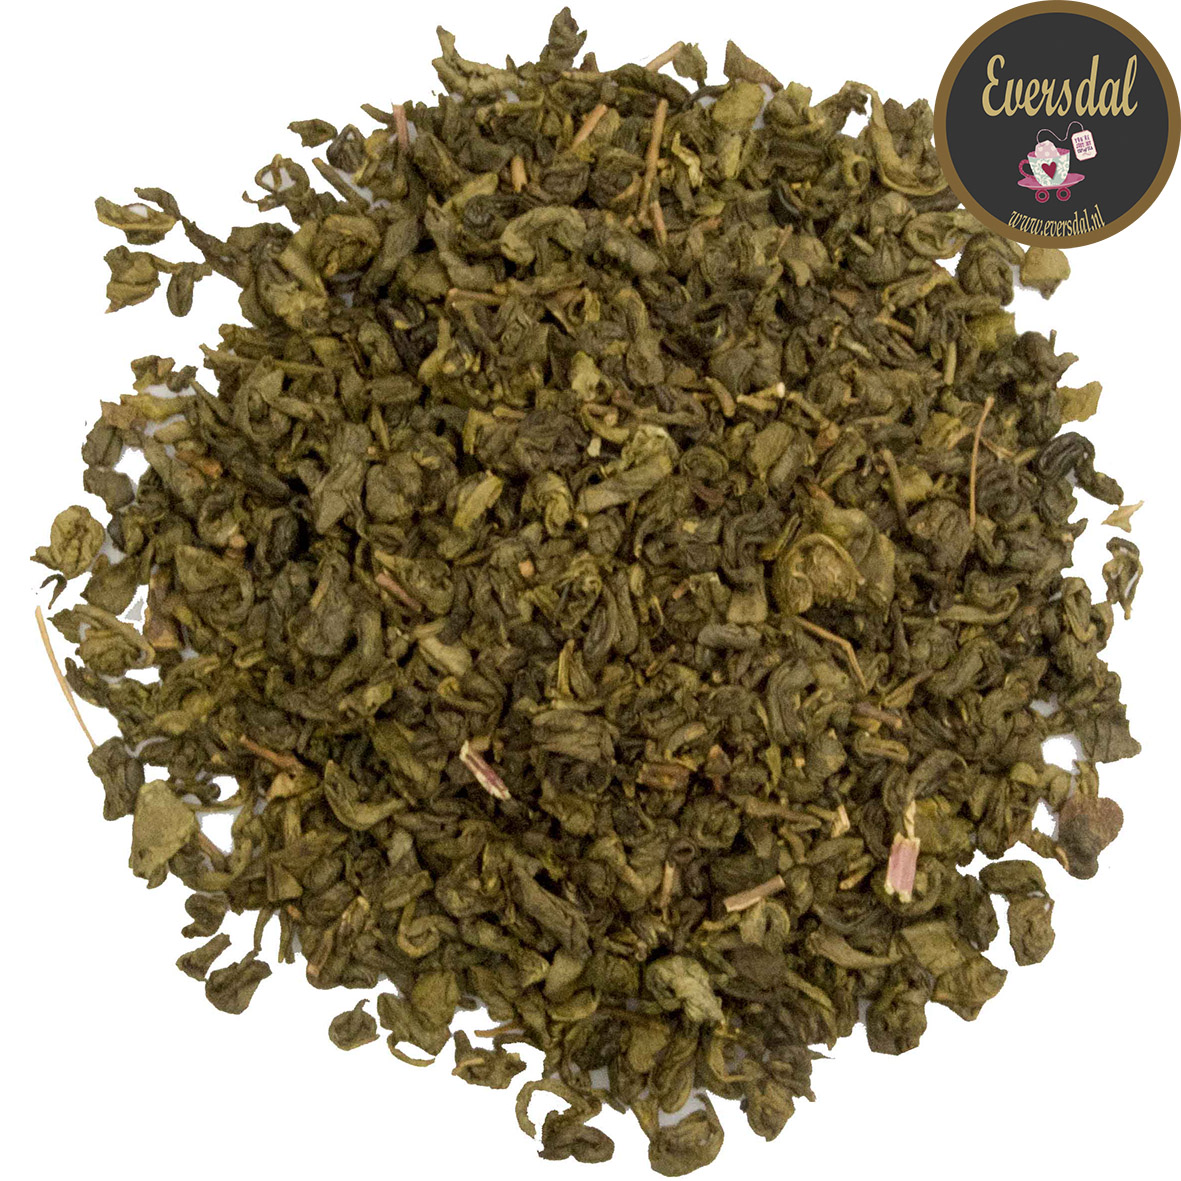 Mint Marrakesh - groene thee met munt